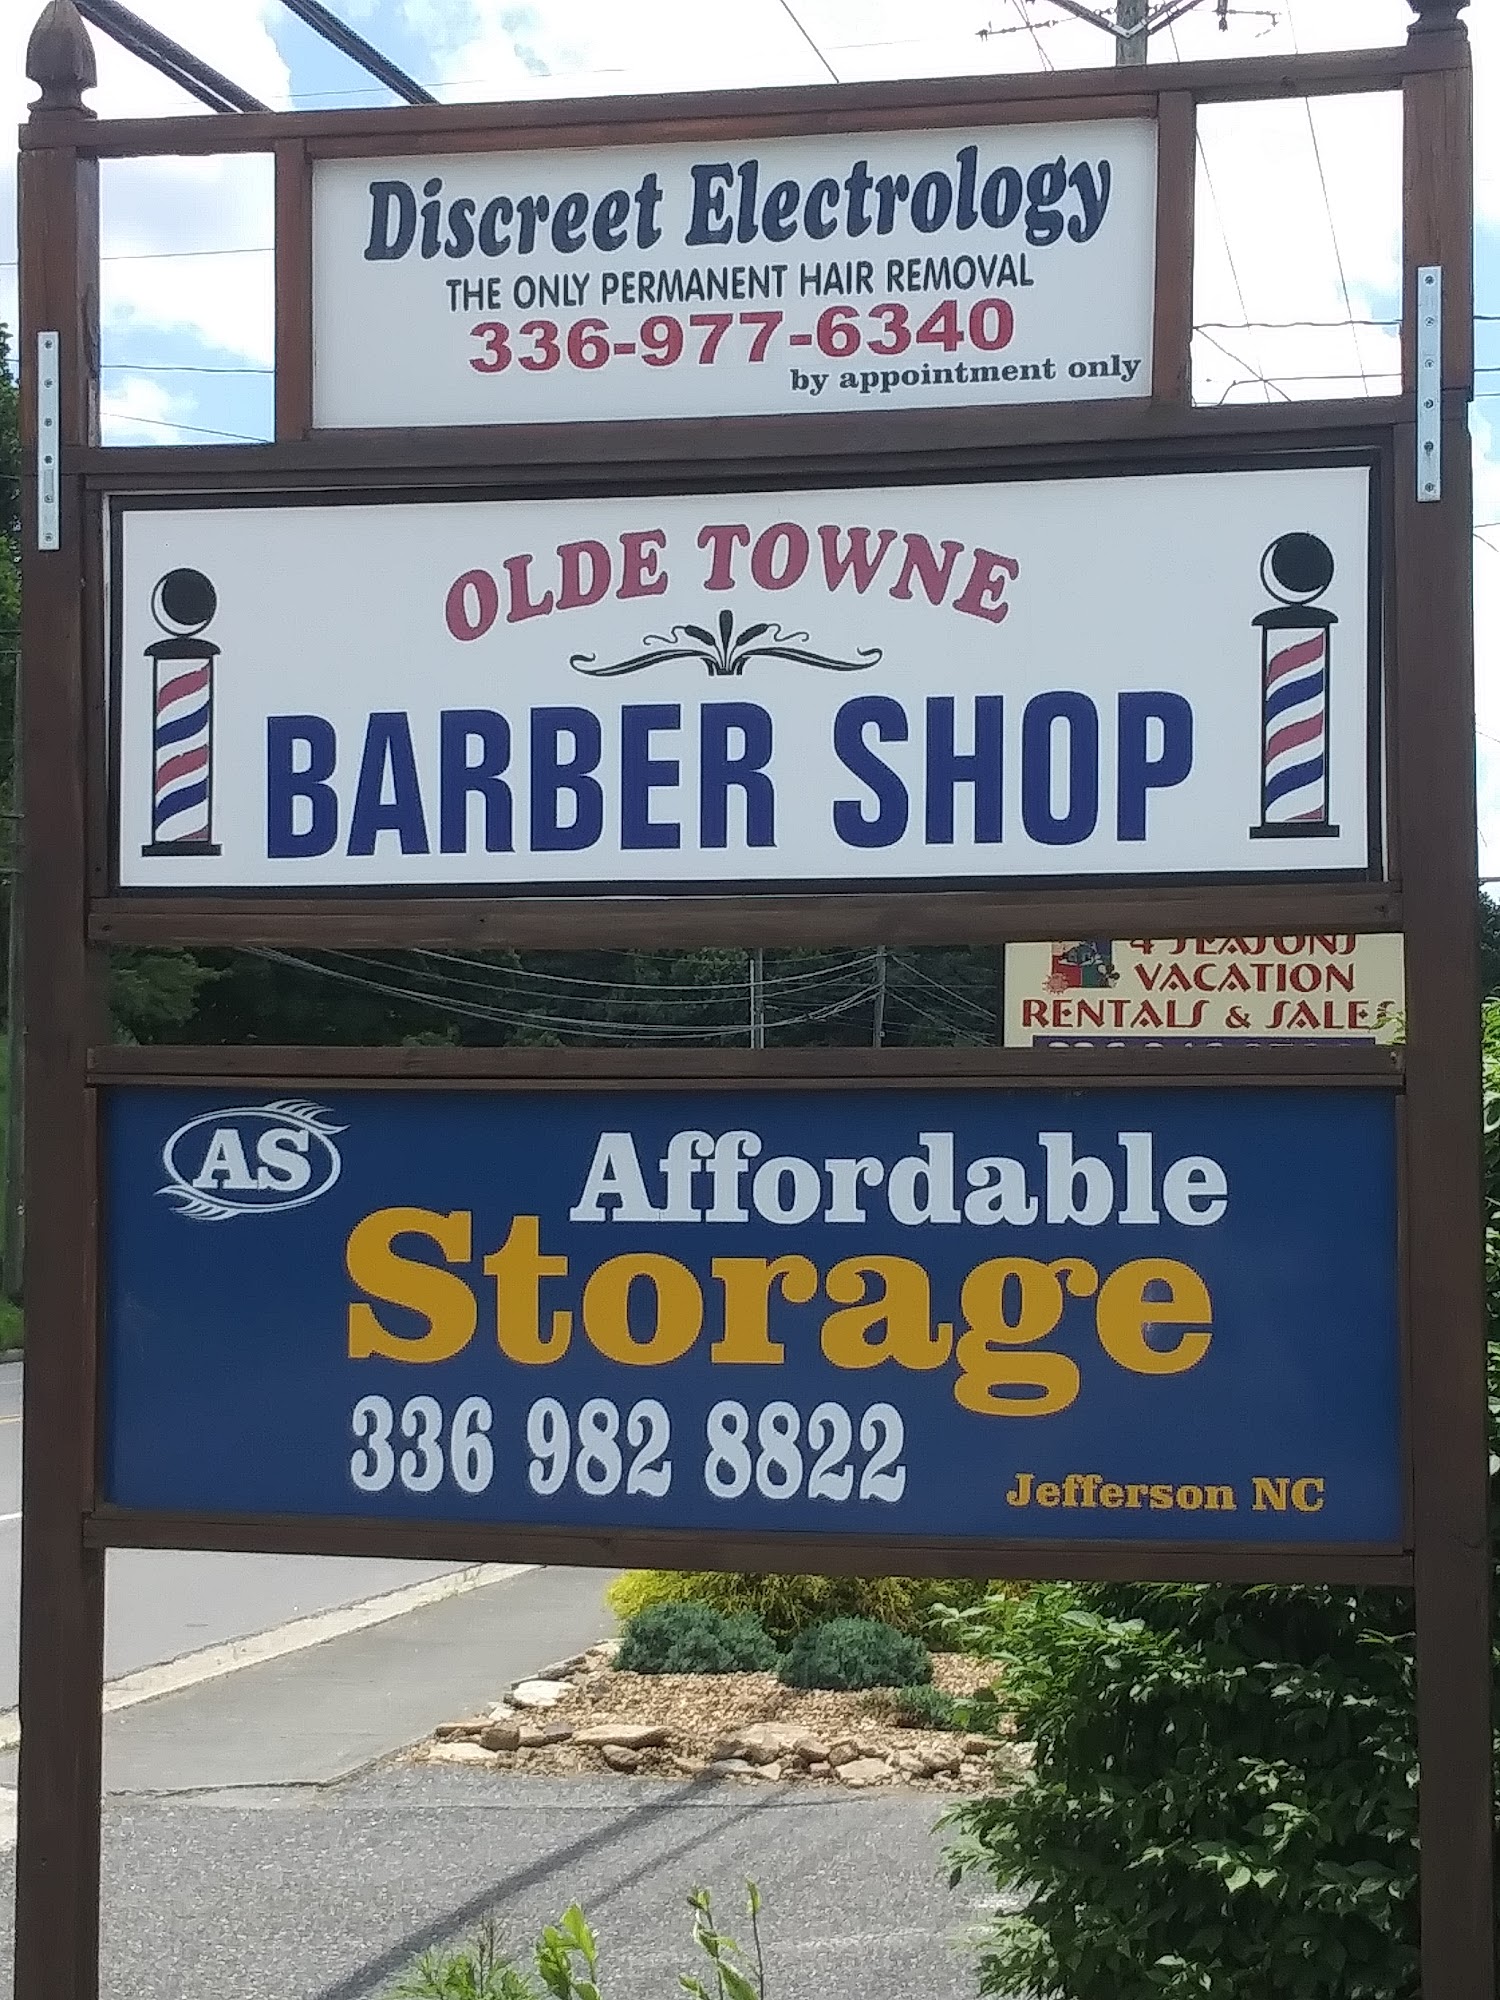 Olde Towne Barber Shop 360 S Main St, Jefferson North Carolina 28640